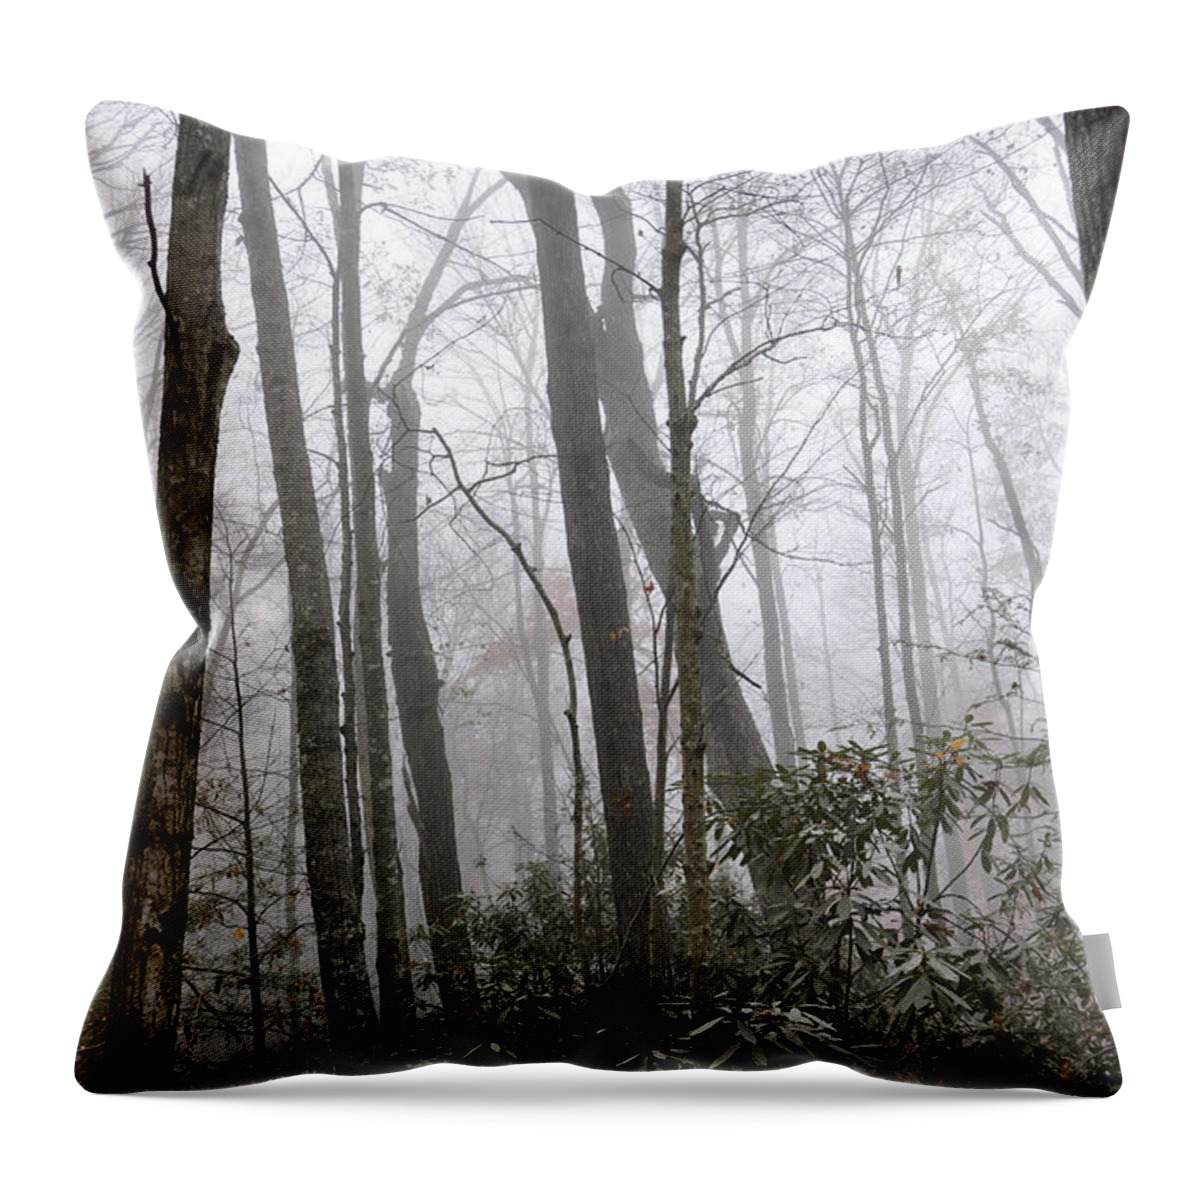 Smoky Mountains Throw Pillow featuring the photograph Smoky Mountain Hardwoods by Craig Burgwardt